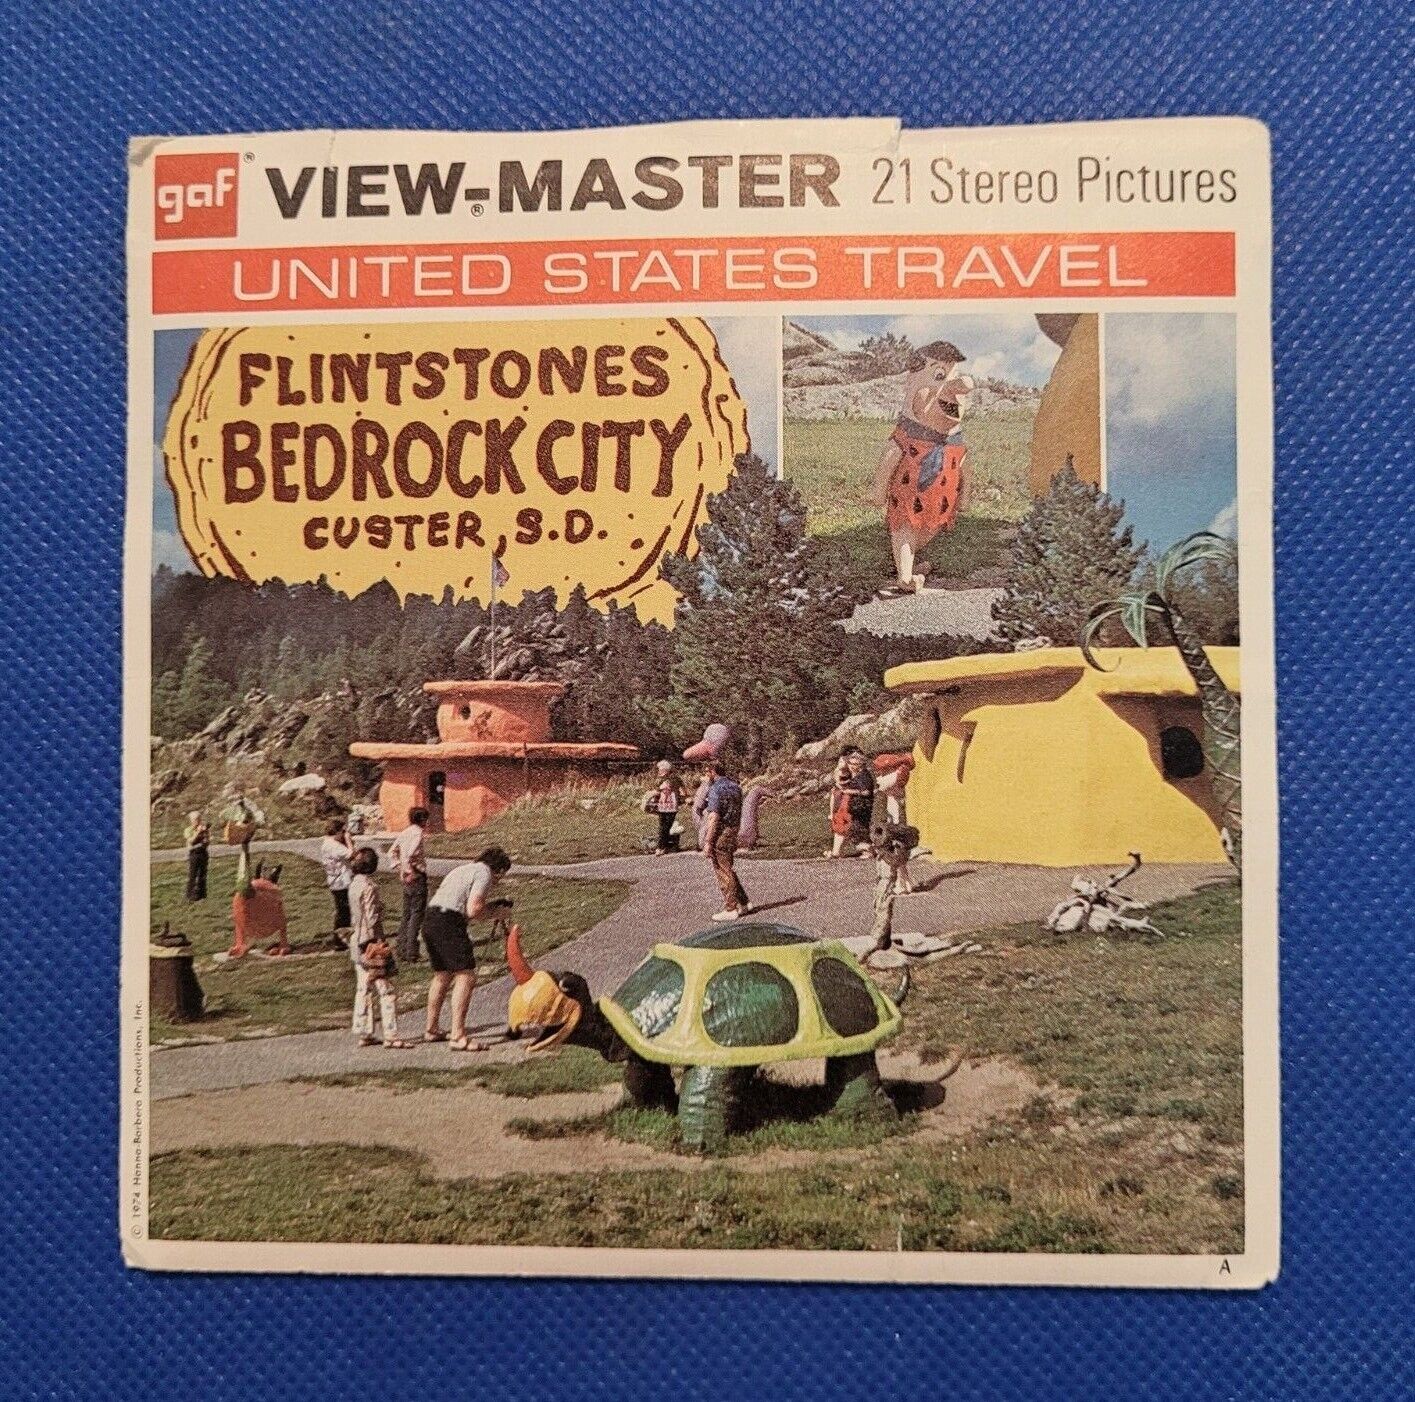 A493 Gaf Flintstones Bedrock City Custer South Dakota view-master 3 Reels Packet